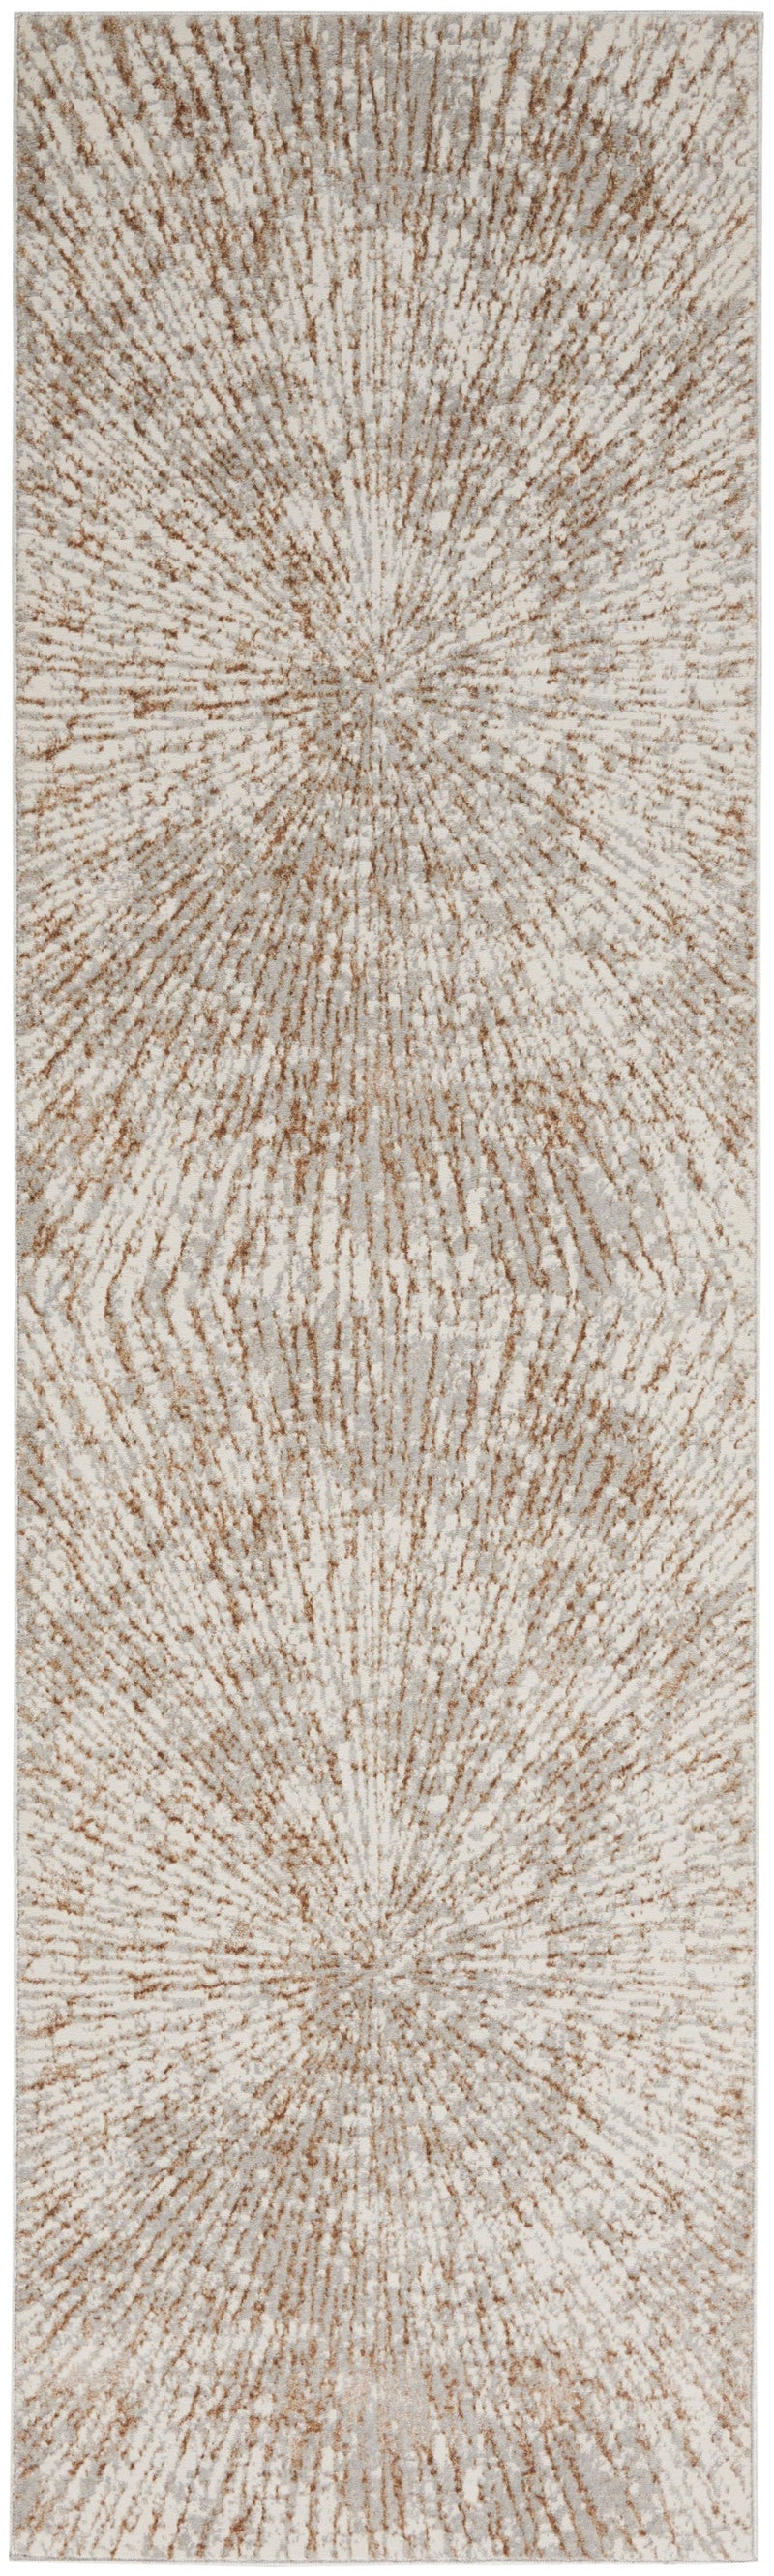 media image for metallic grey mocha rug by nourison 99446852892 redo 2 275